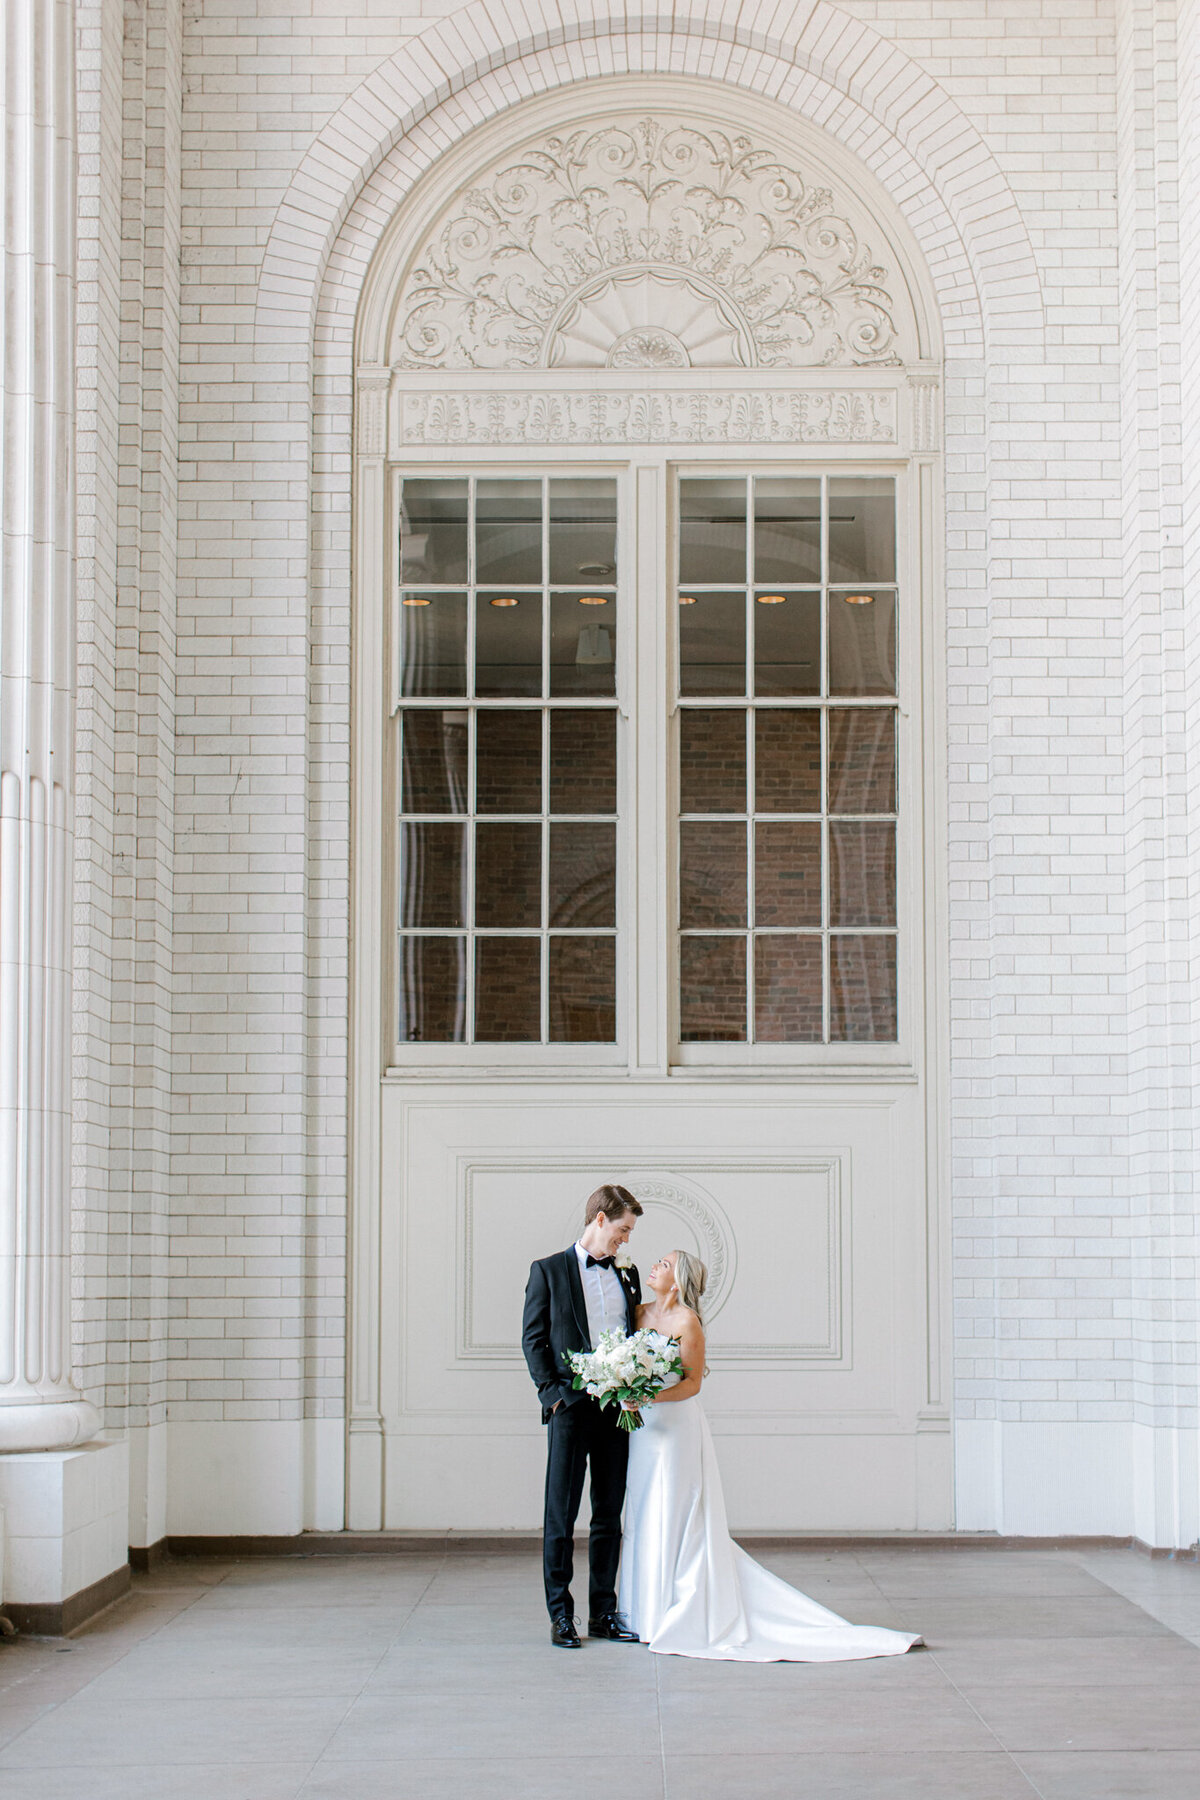 Madison & Michael's Wedding at Union Station | Dallas Wedding Photographer | Sami Kathryn Photography-64